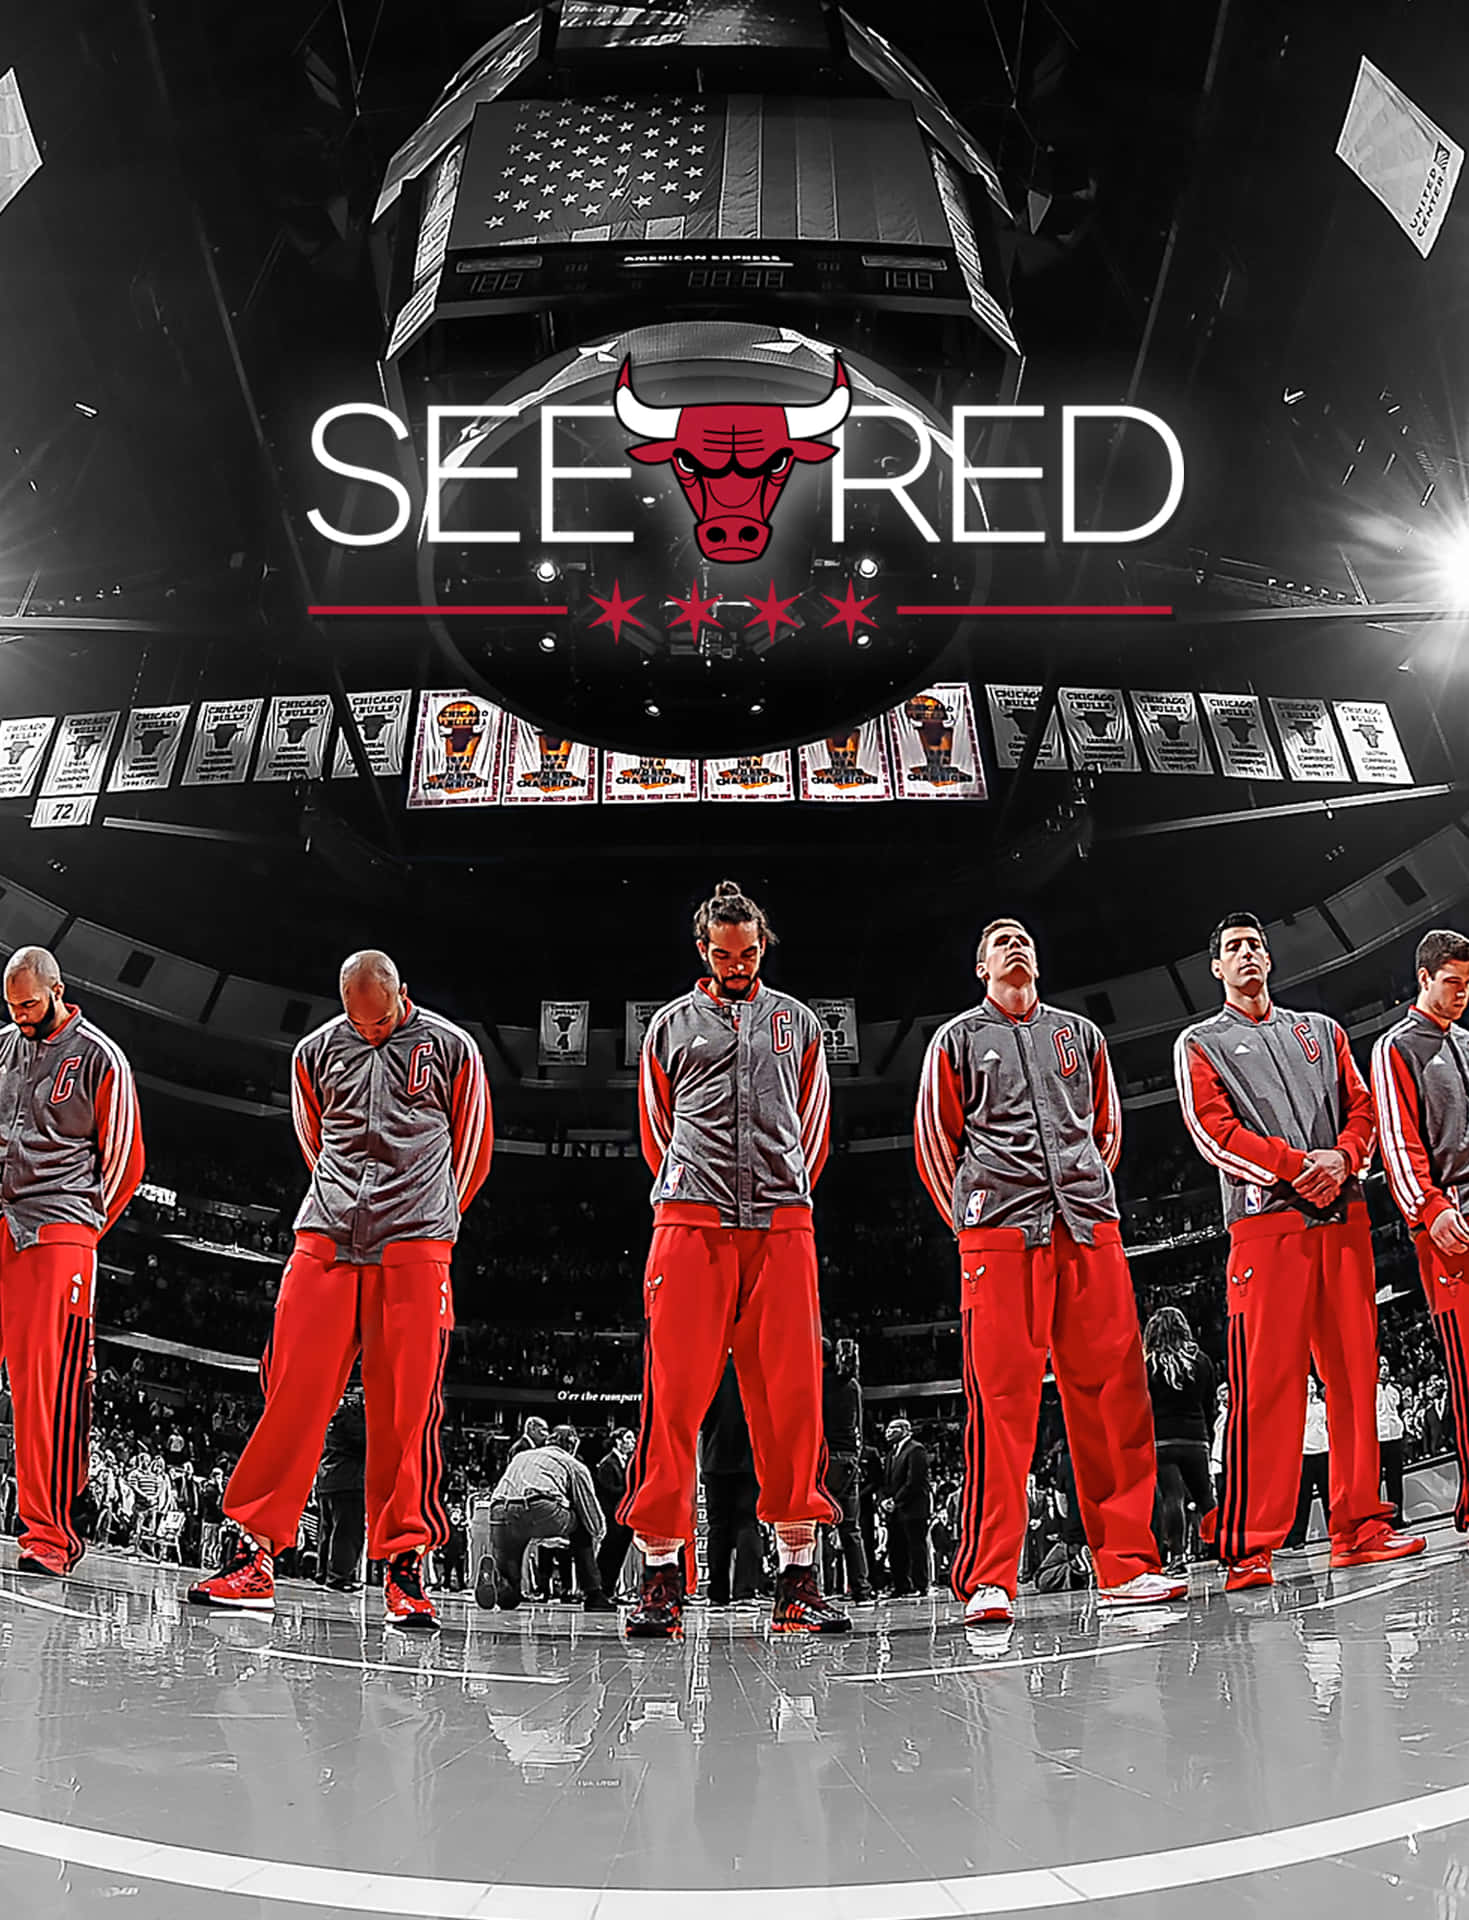 "A showcase of the legendary Chicago Bulls logo on an iPhone Wallpaper